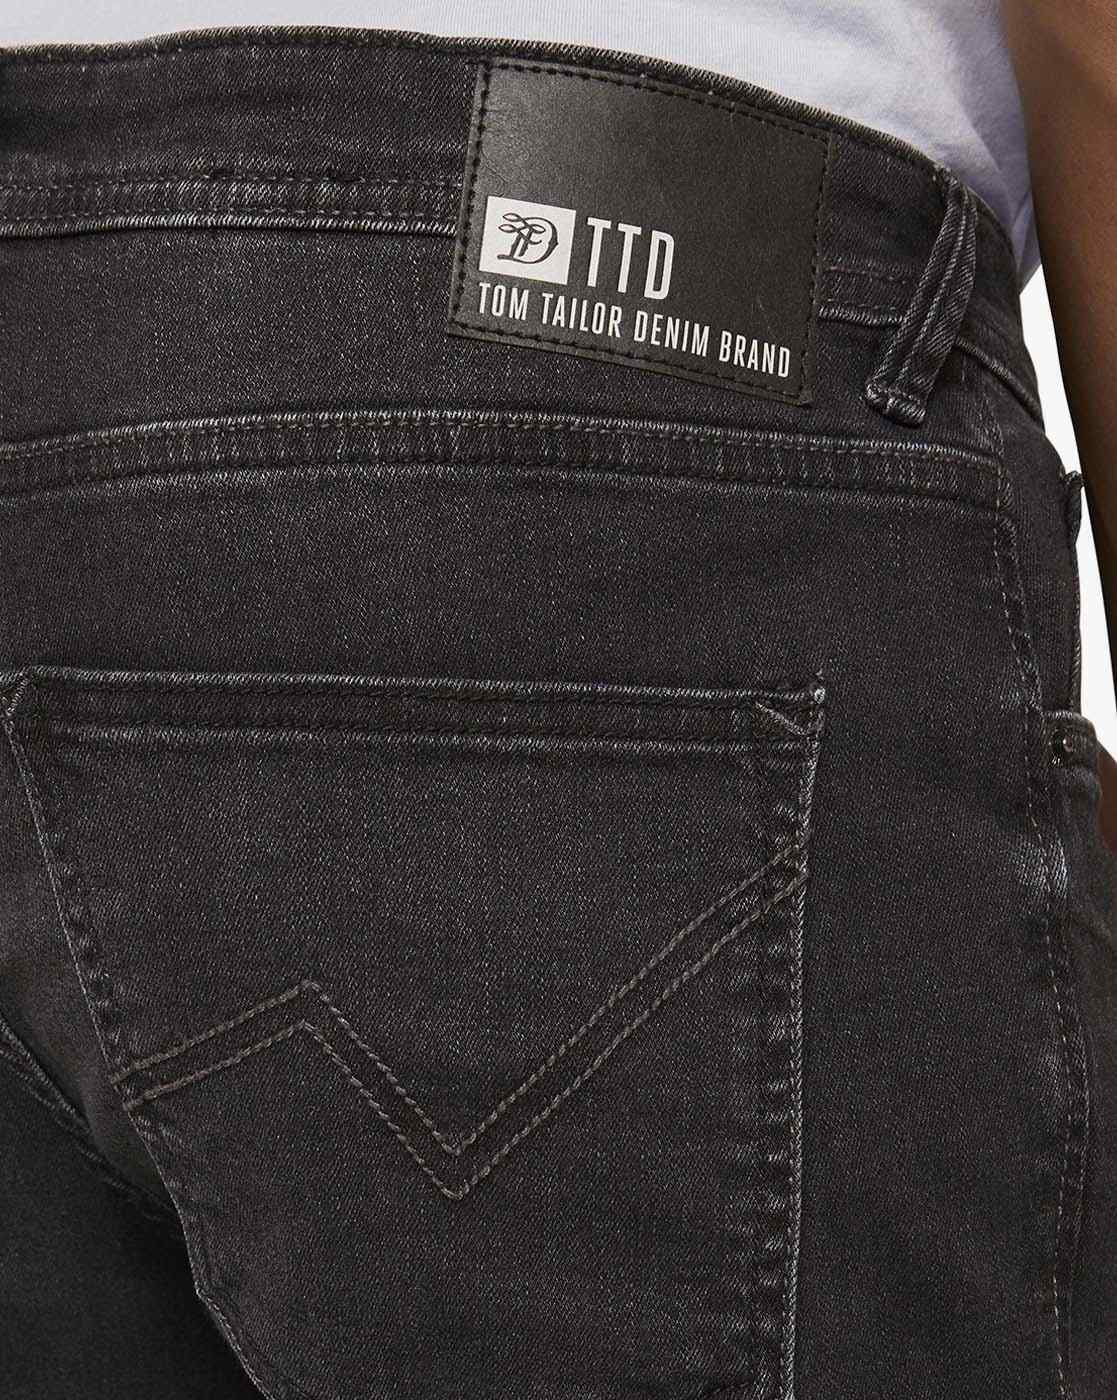 TOM TAILOR Denim Piers slim fit jeans | ASOS